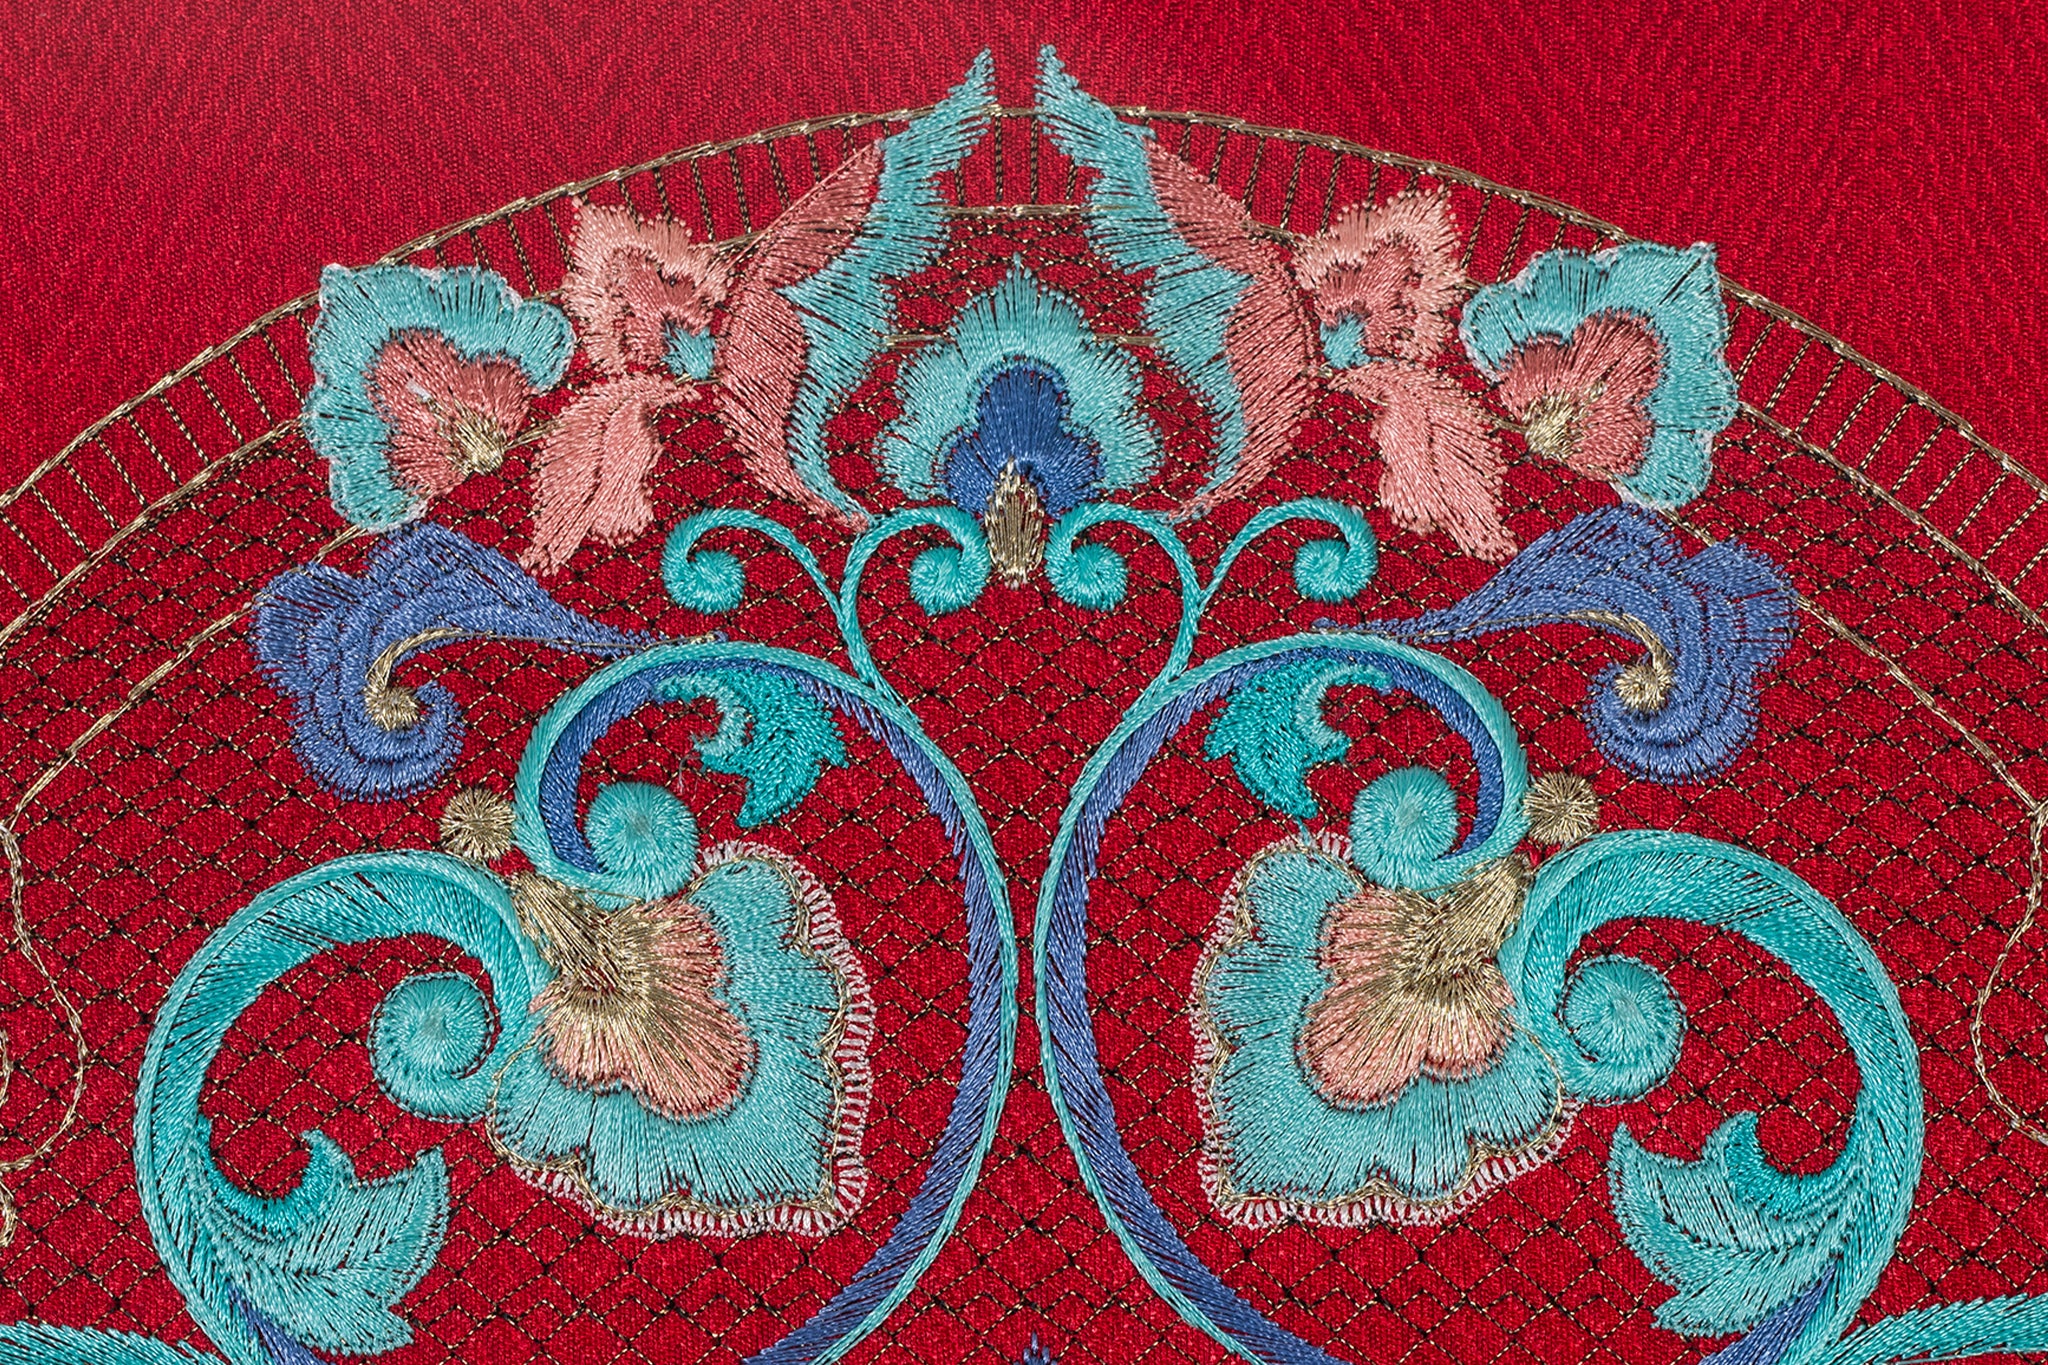 Top detail of an Oriental phoenix crown embroidery artwork.